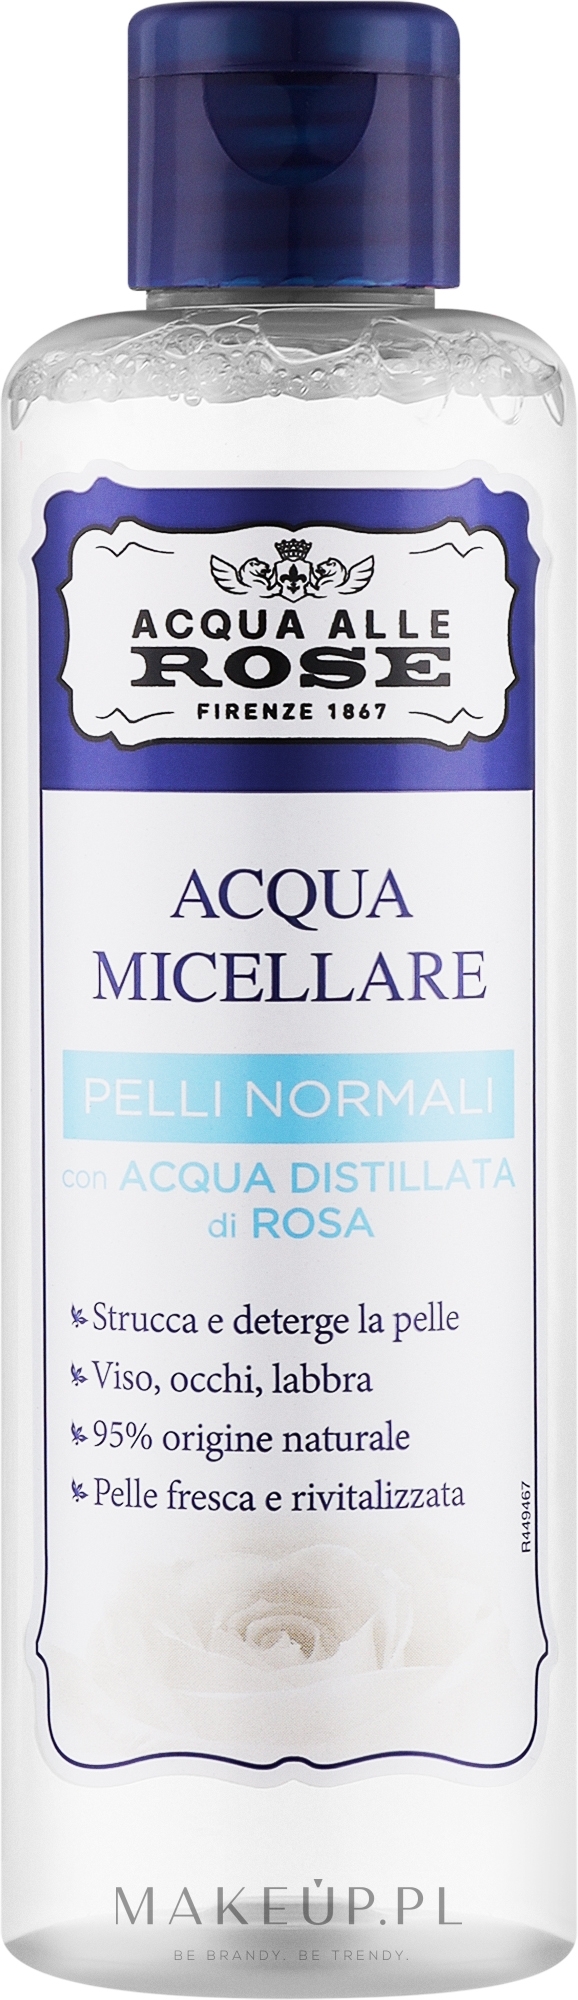 Woda micelarna - Roberts Acqua alle Rose Micellar Water — Zdjęcie 200 ml